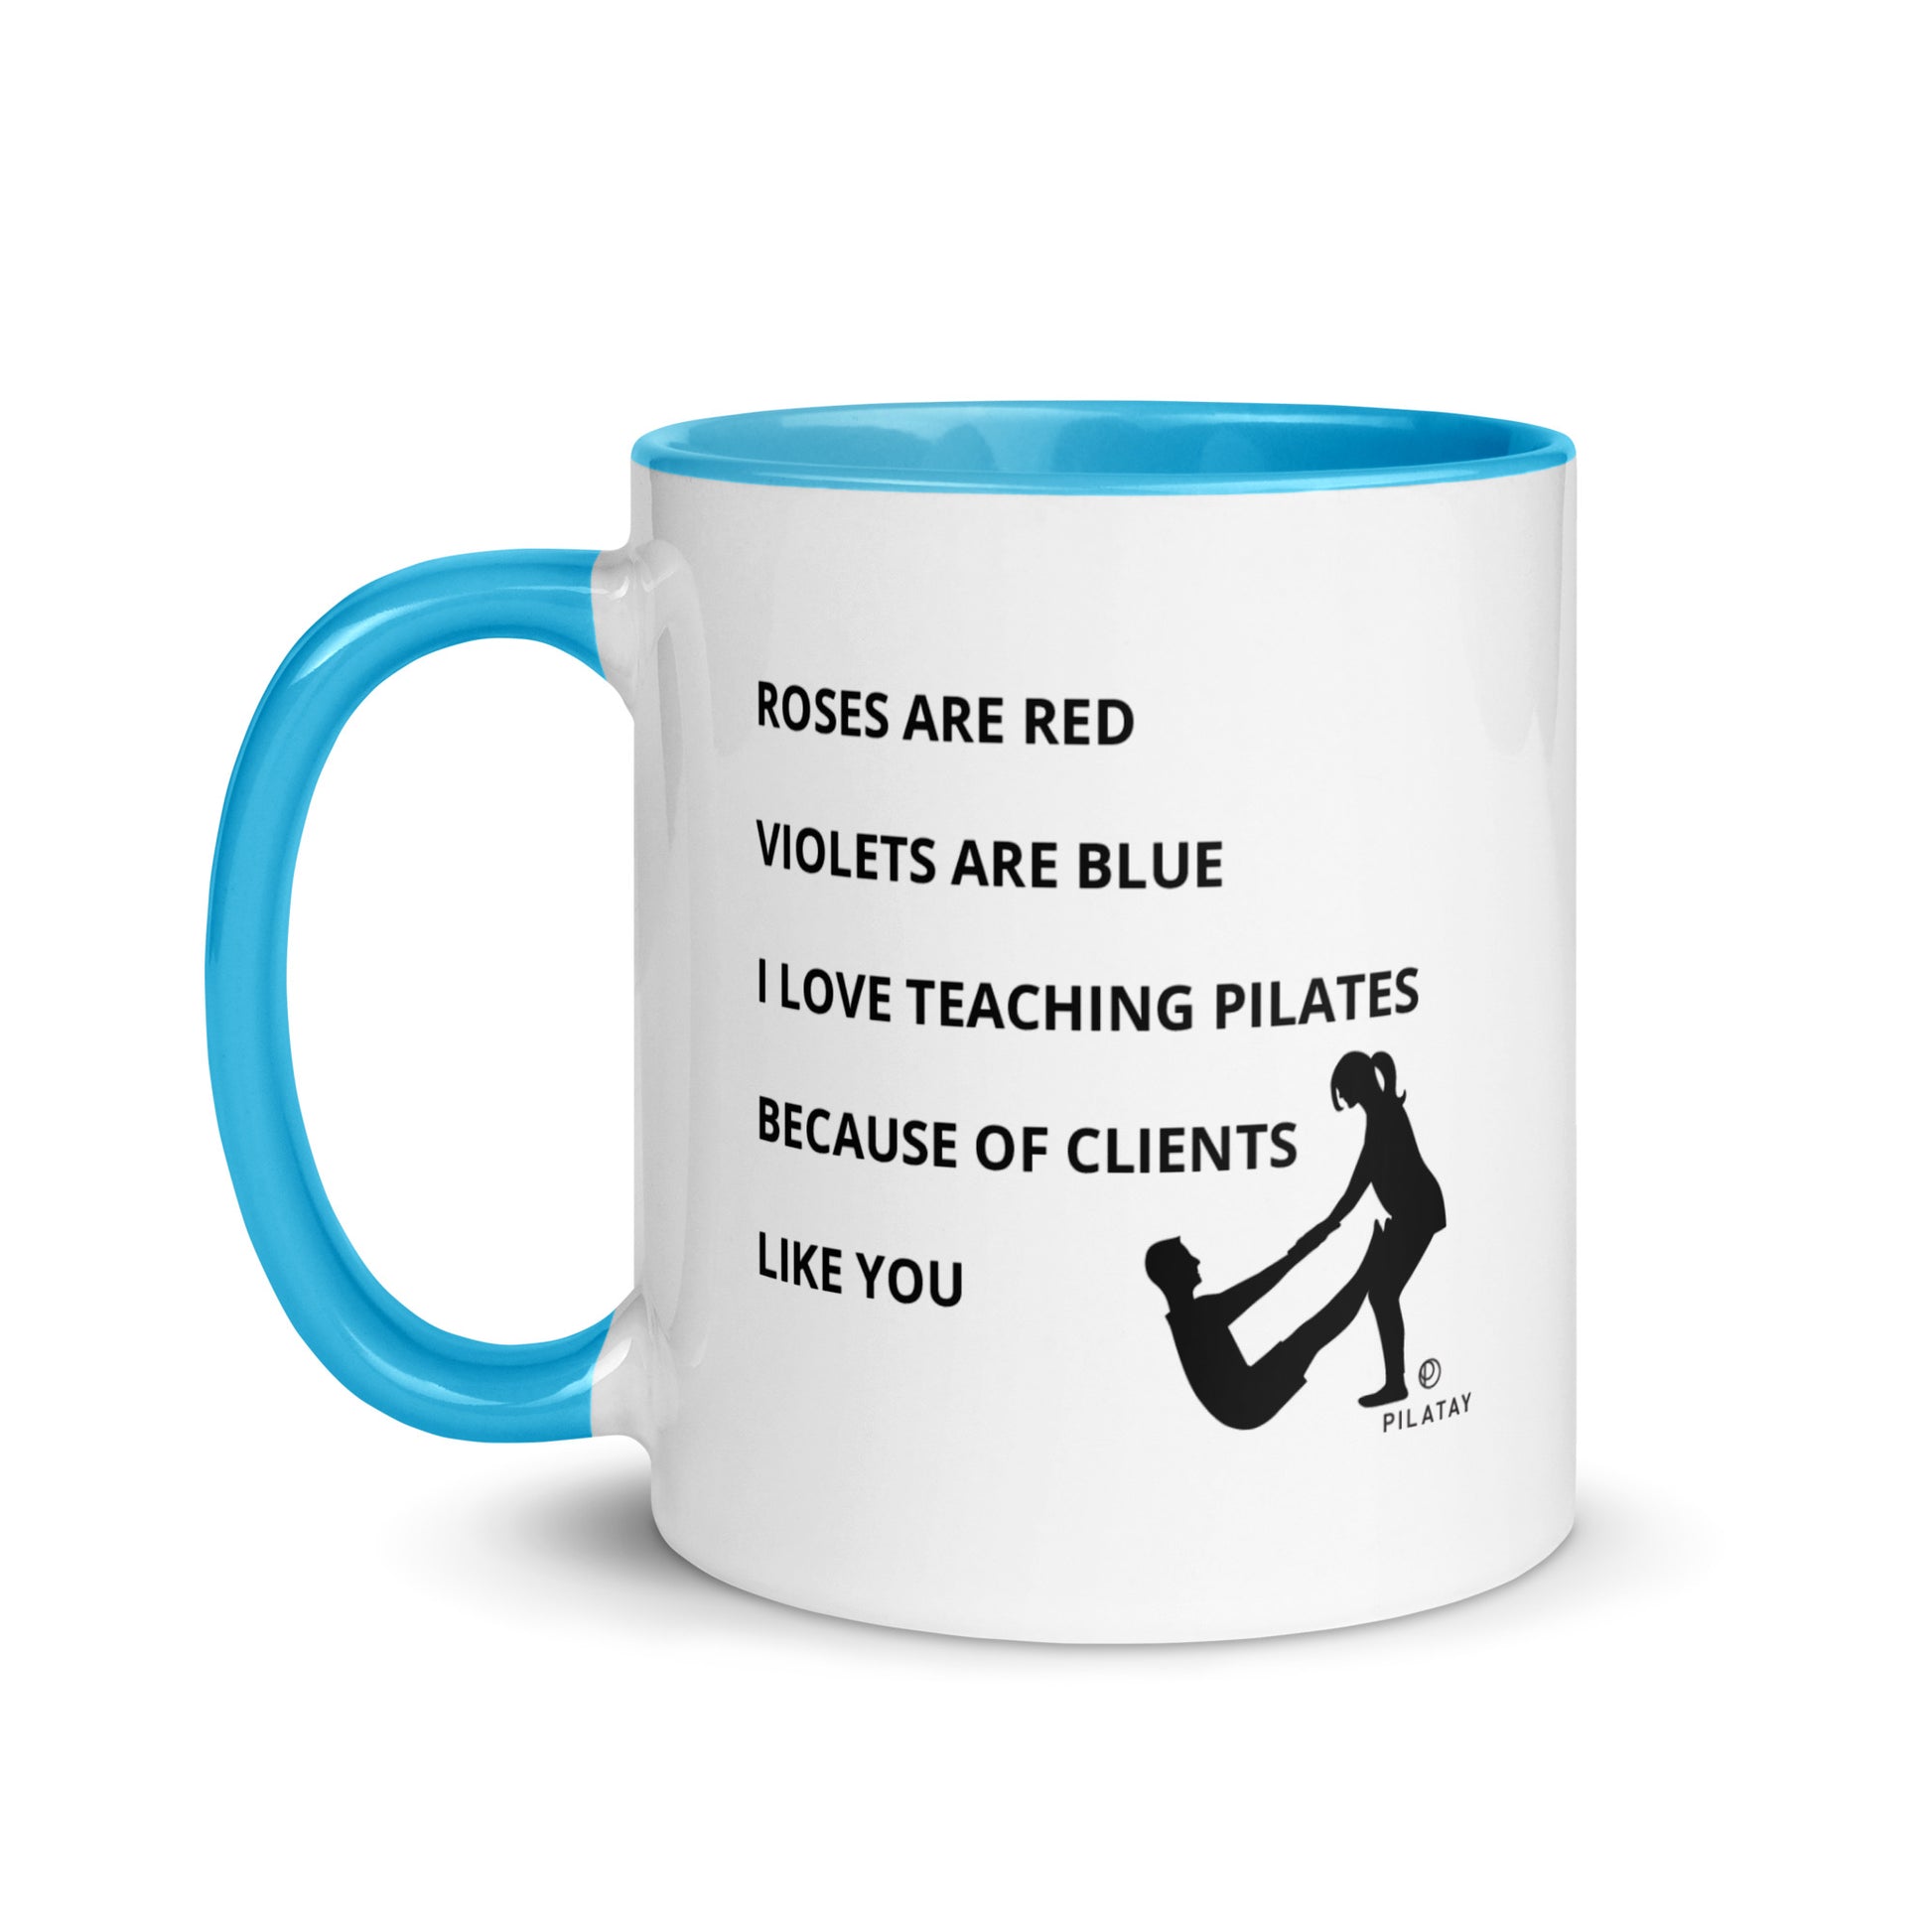 I love teaching Pilates Mug - Gifts for Pilates clients, pilates